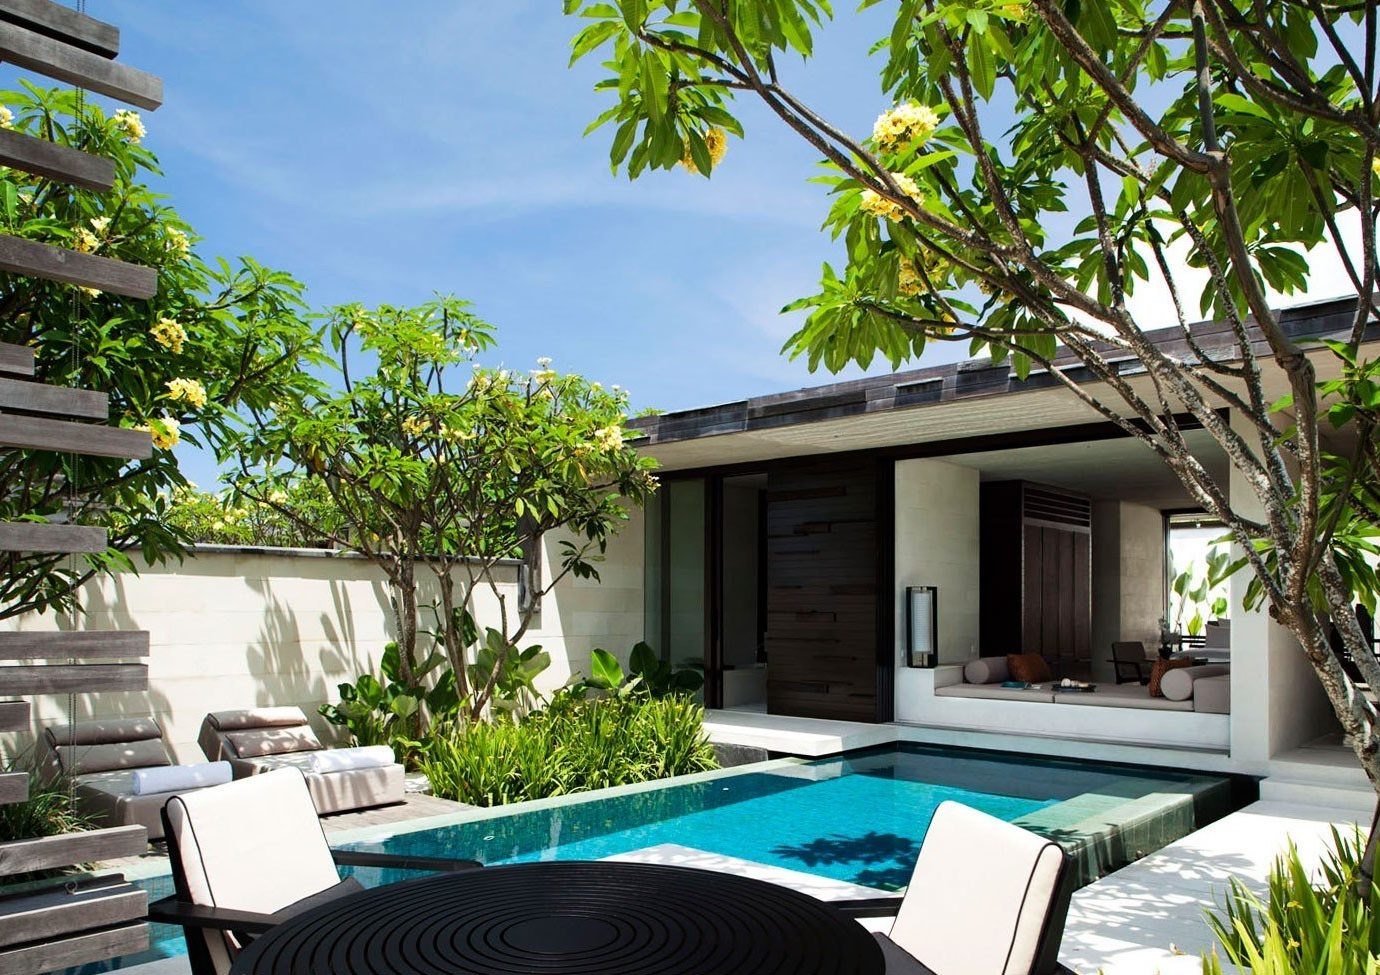 Private pool in Bali, Indonesia